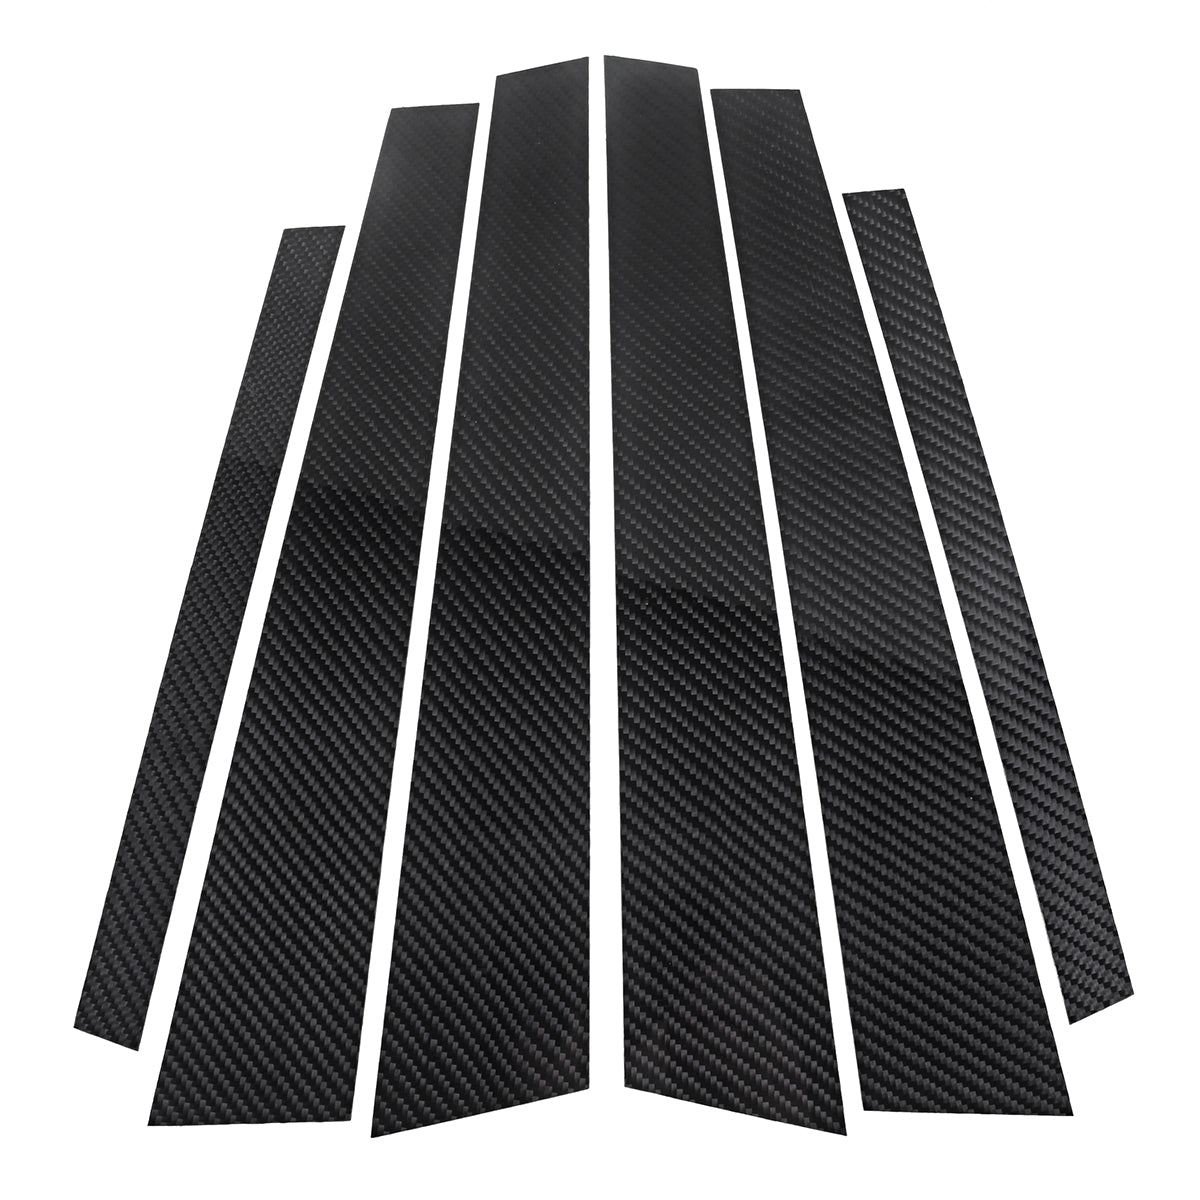 Dark Slate Gray Carbon Fiber Car Window B-pillars Molding Trim Car Styling Stickers for BMW 3 5 Series